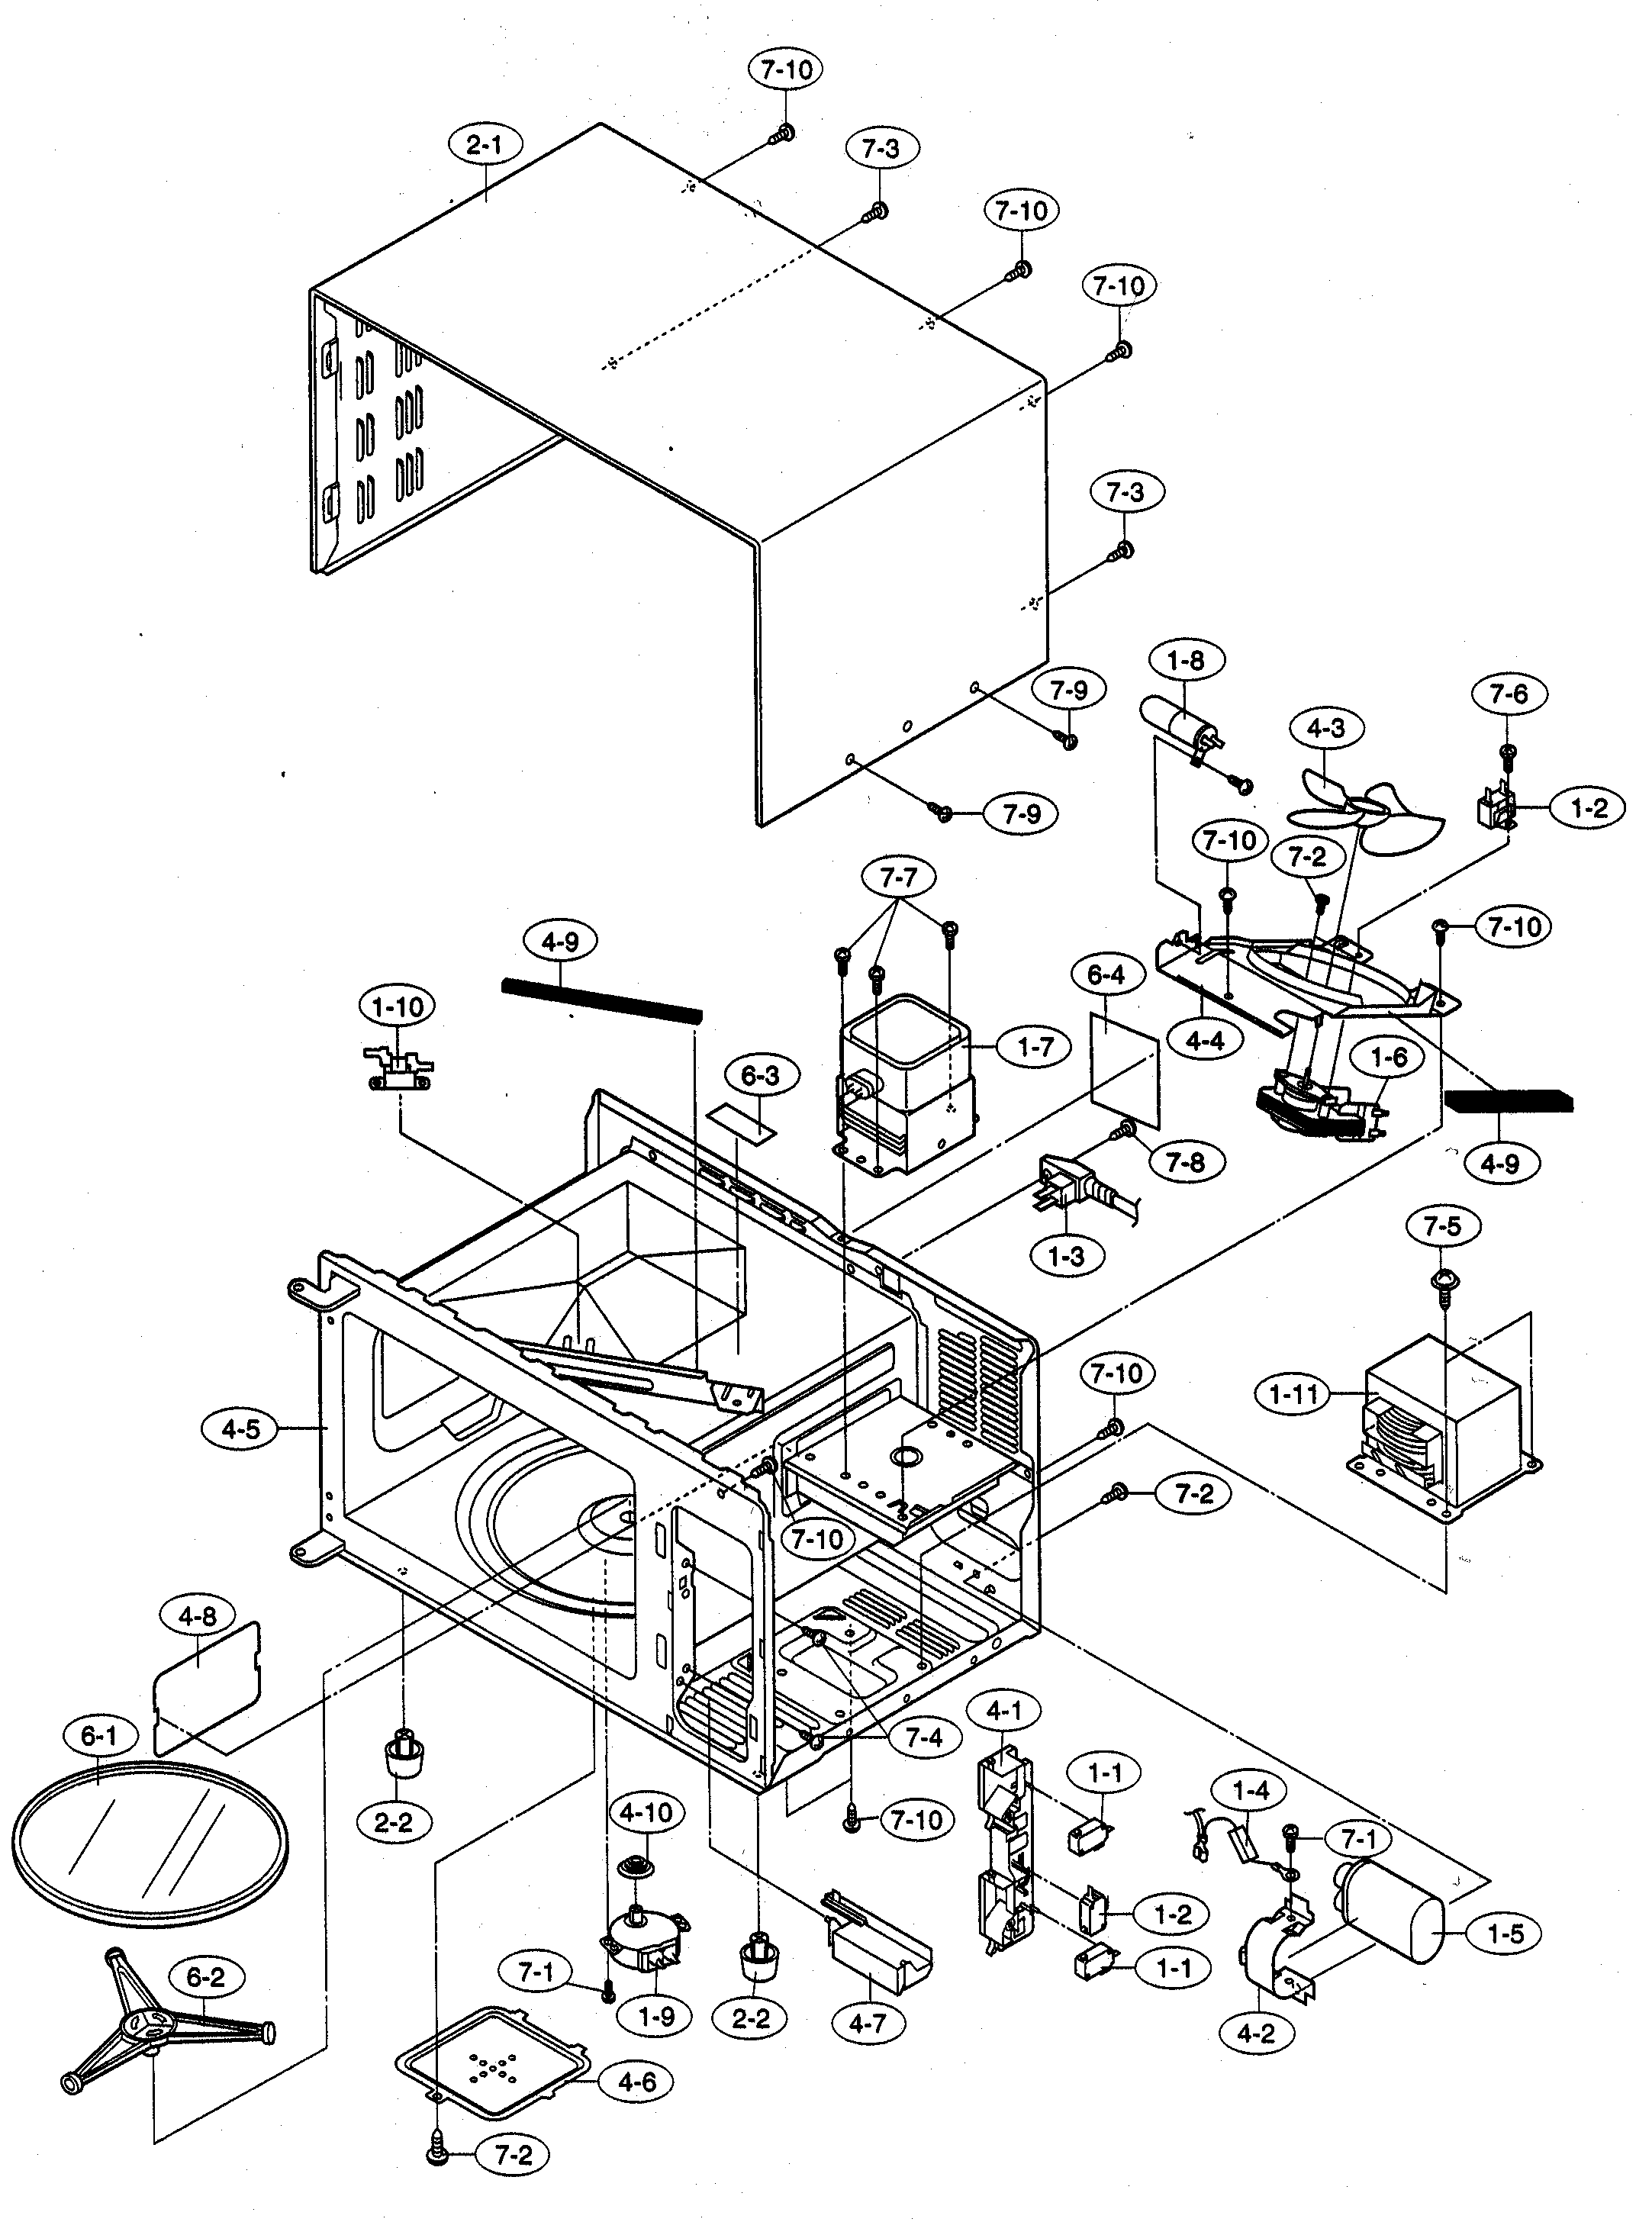 31 Sharp Carousel Microwave Parts Diagram - Wiring Diagram List